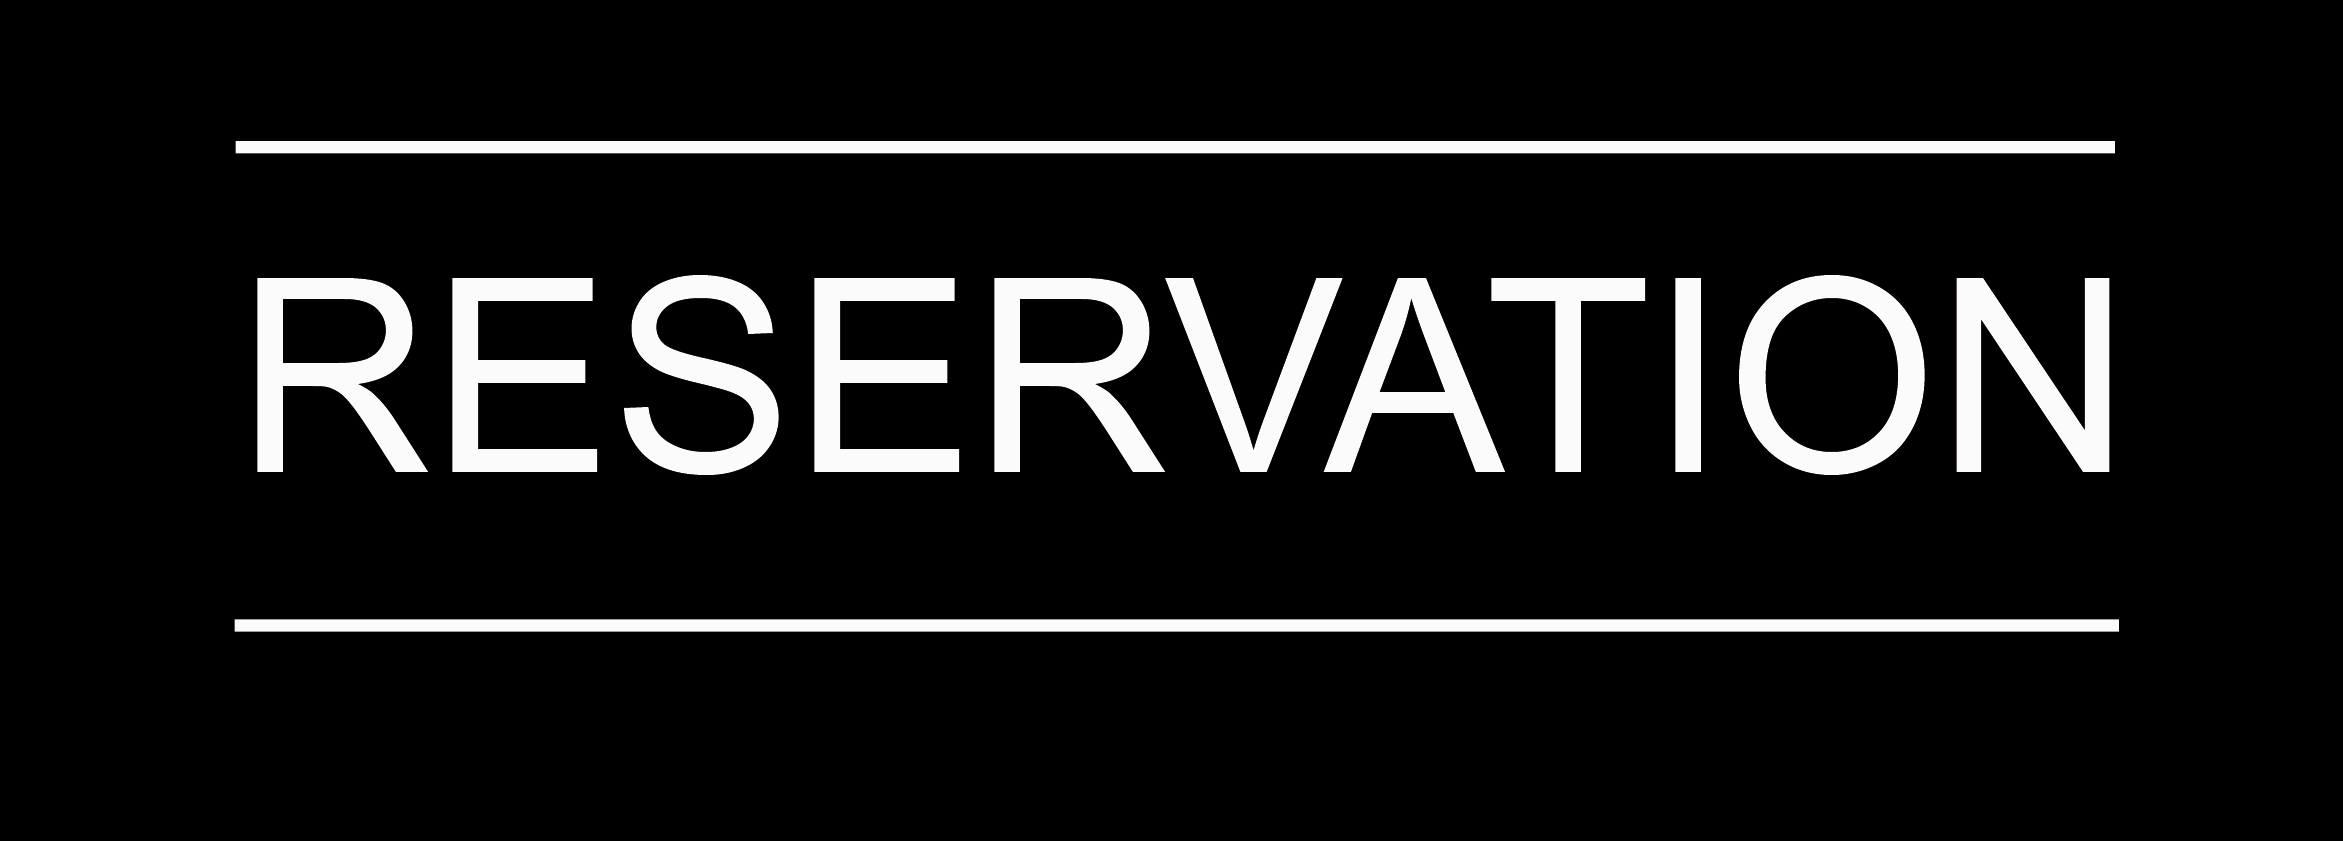 logo-reservation.jpg